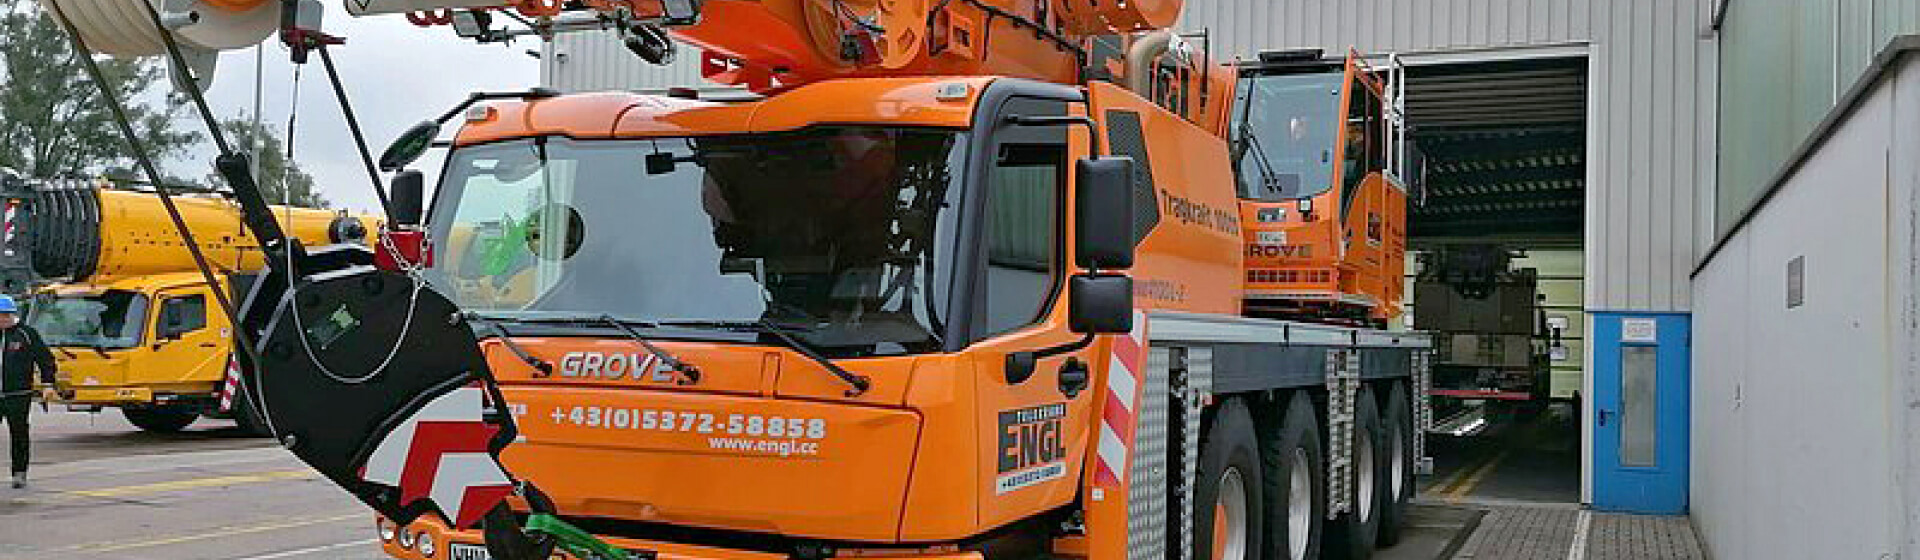 Engl-expands-crane-rental-fleet-with-new-Grove-GMK4100L-2-all-terrain-crane-1.jpg